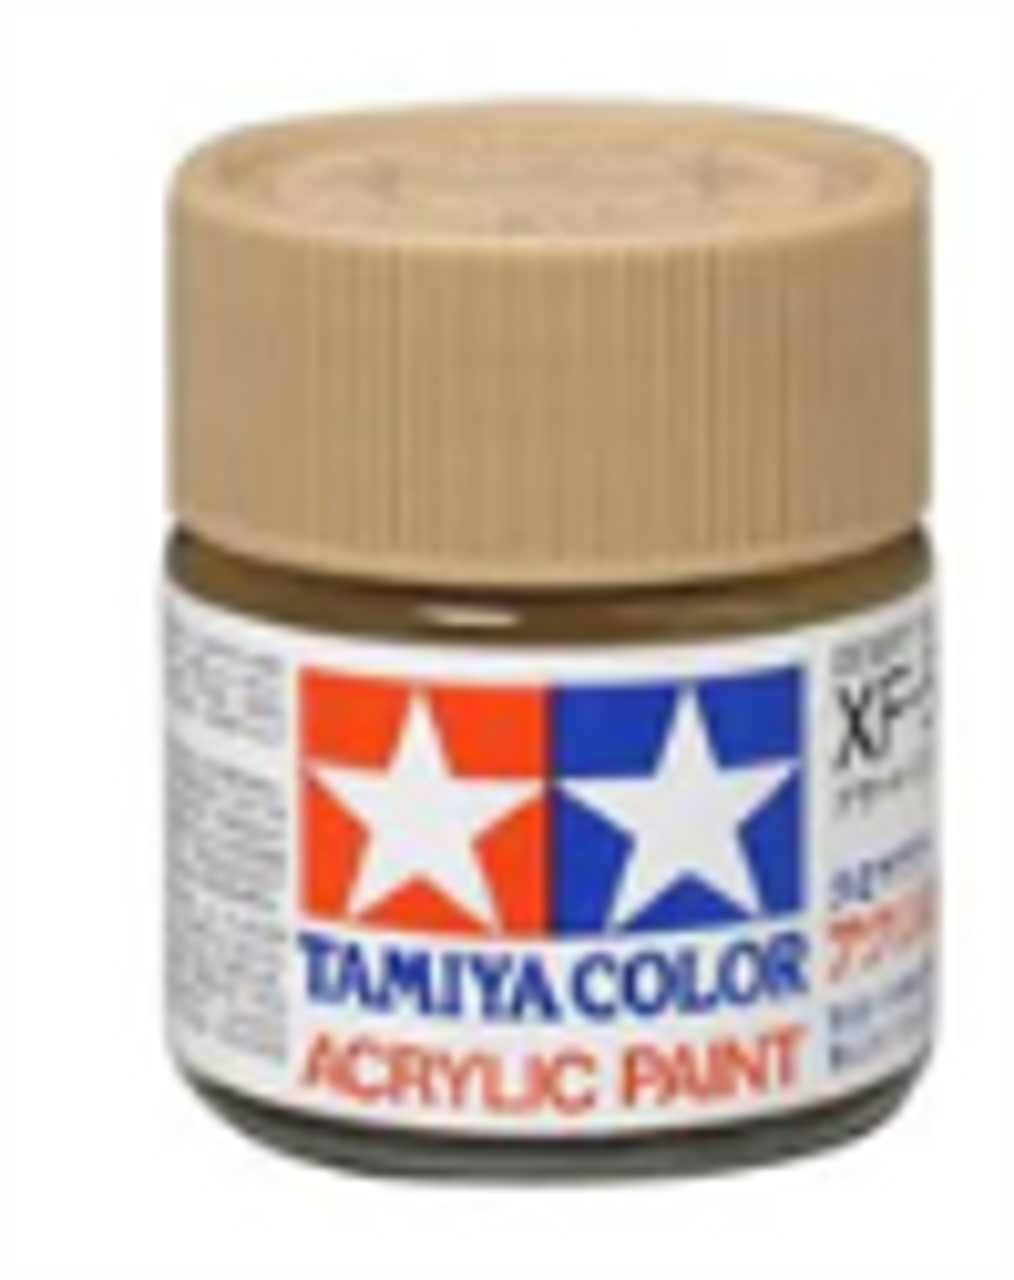 Tamiya USA Tam81708 Acrylic Mini Xf8 Flat Blue for sale online